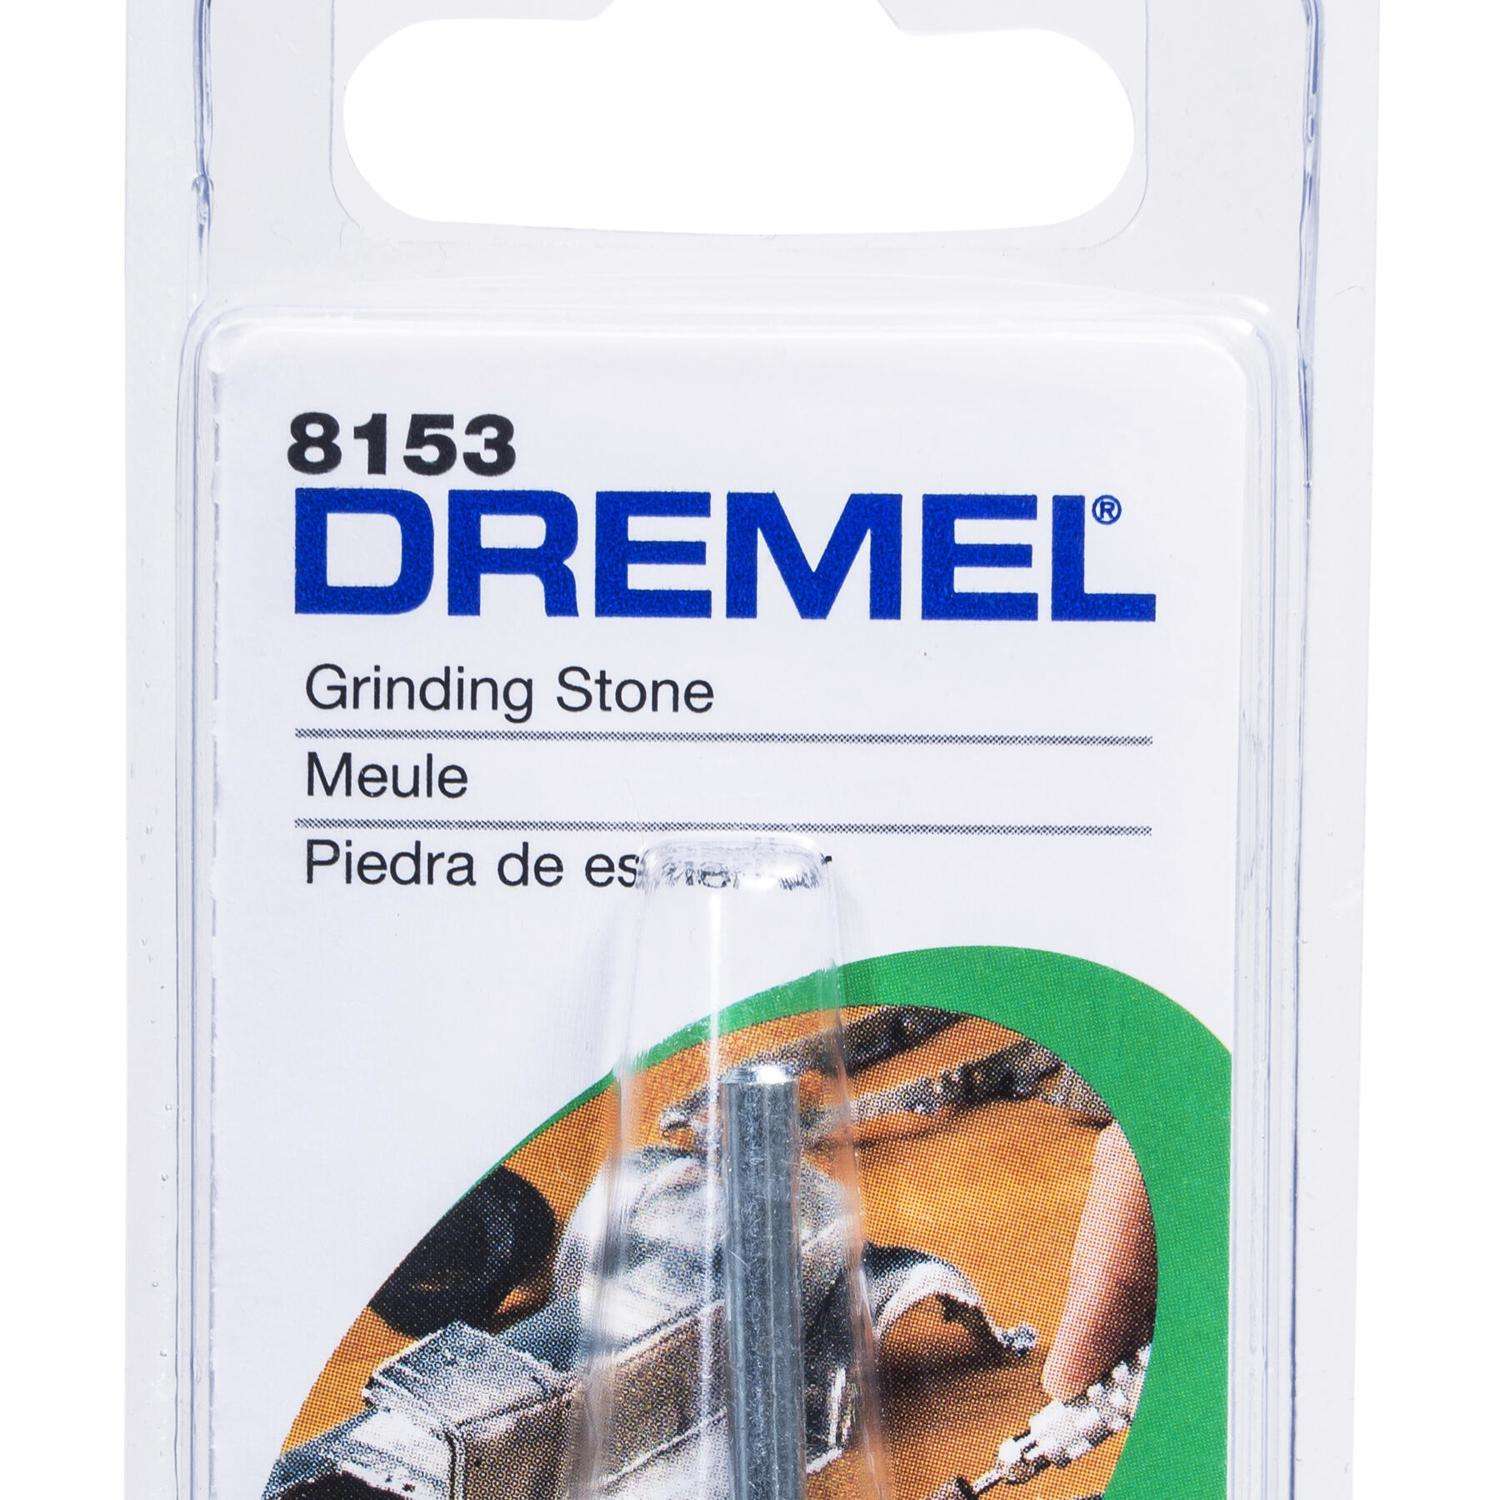 Dremel Aluminum Oxide 3/16-in Grinding/Sharpening Bit Accessory in